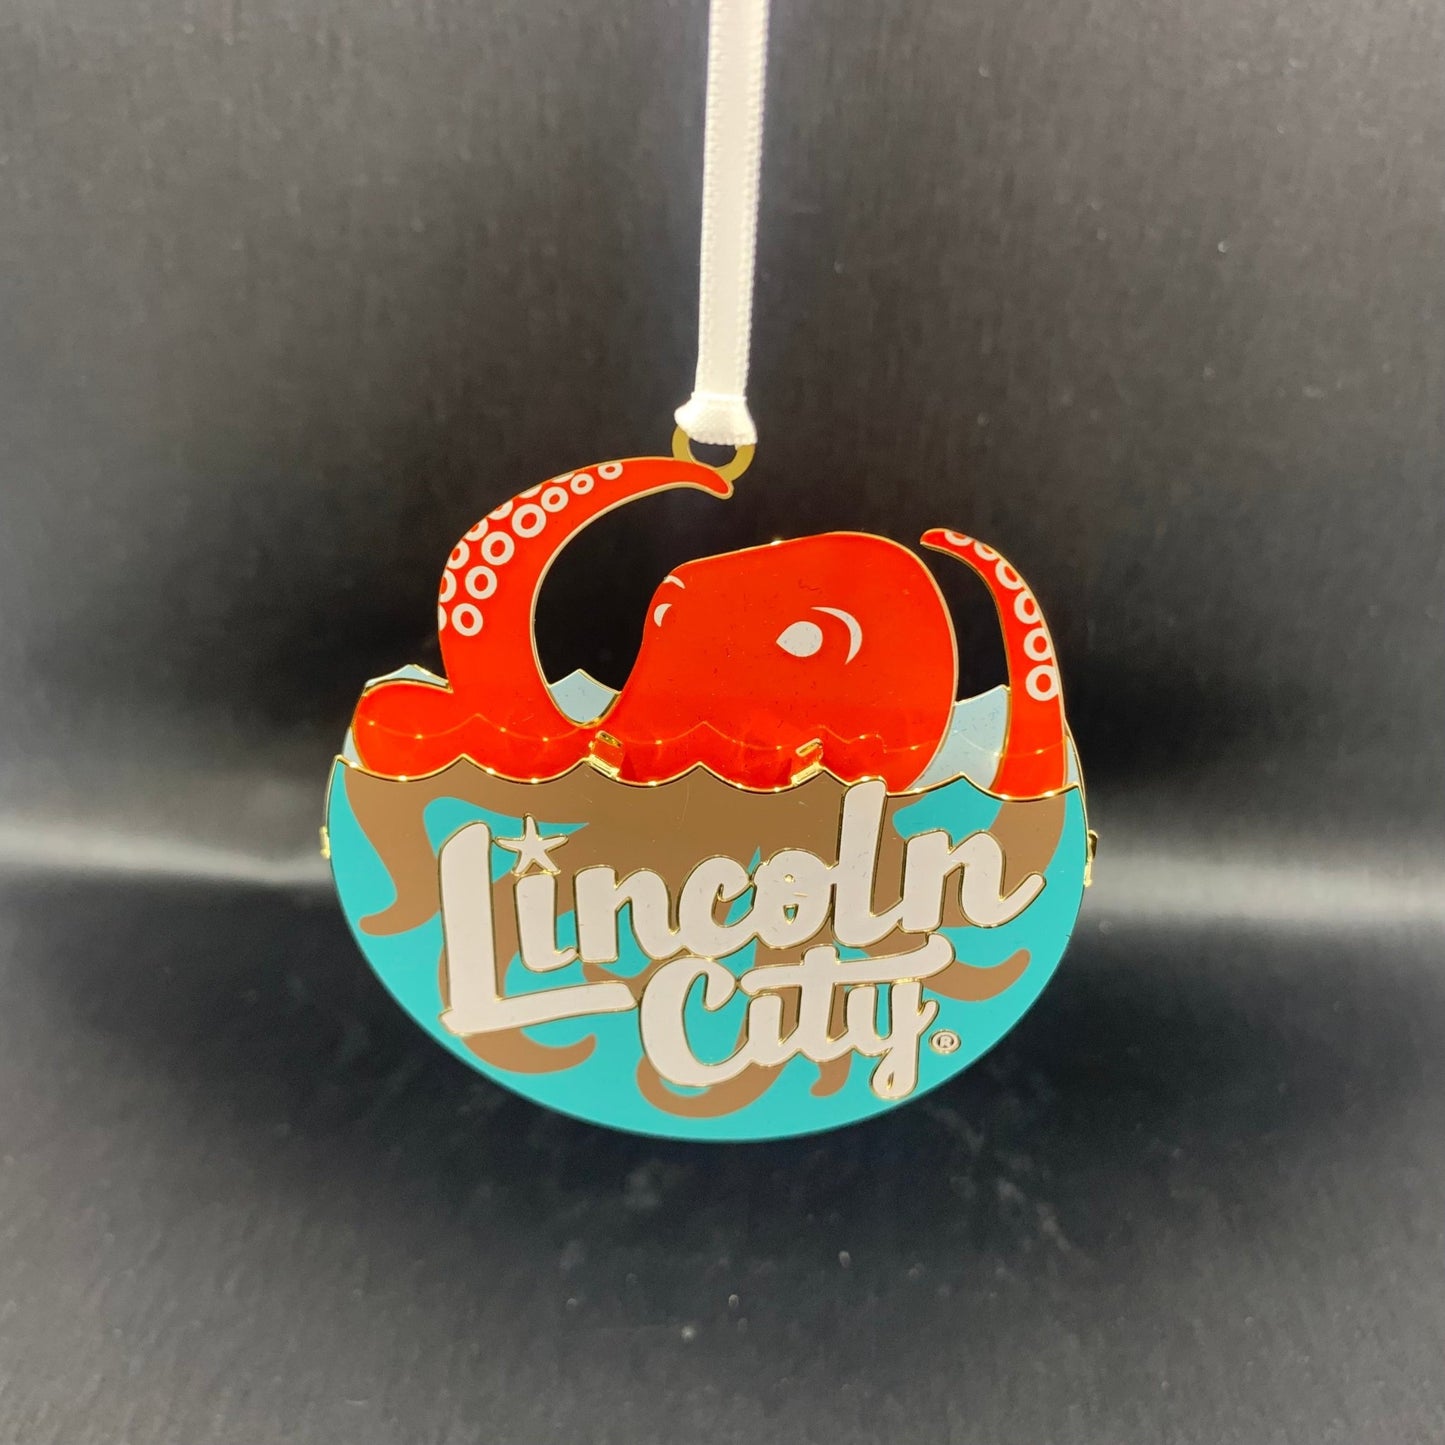 Ornament -Logo for "Lincoln City"